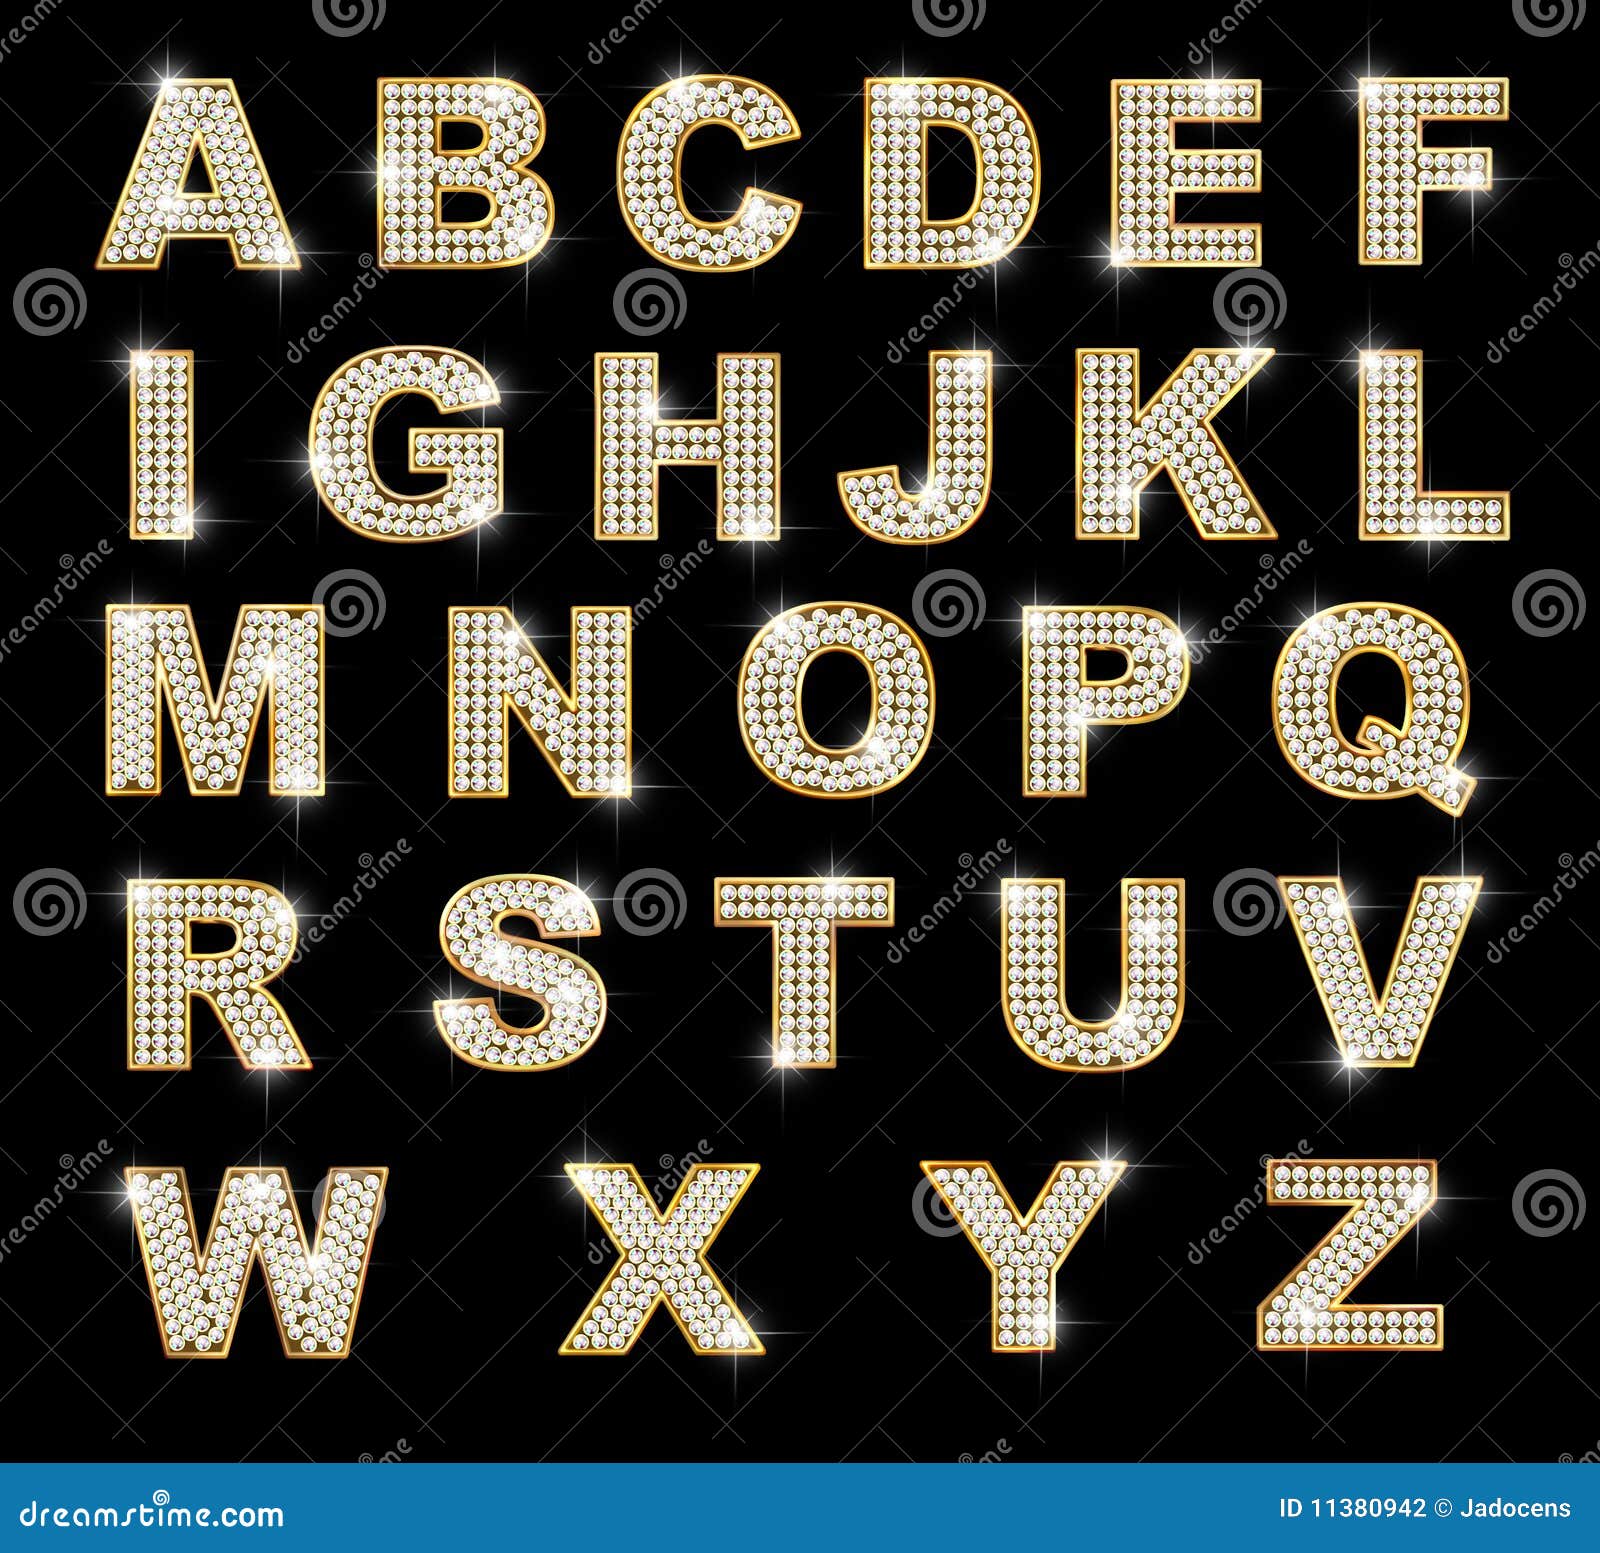 brilliant latin letters on dark background